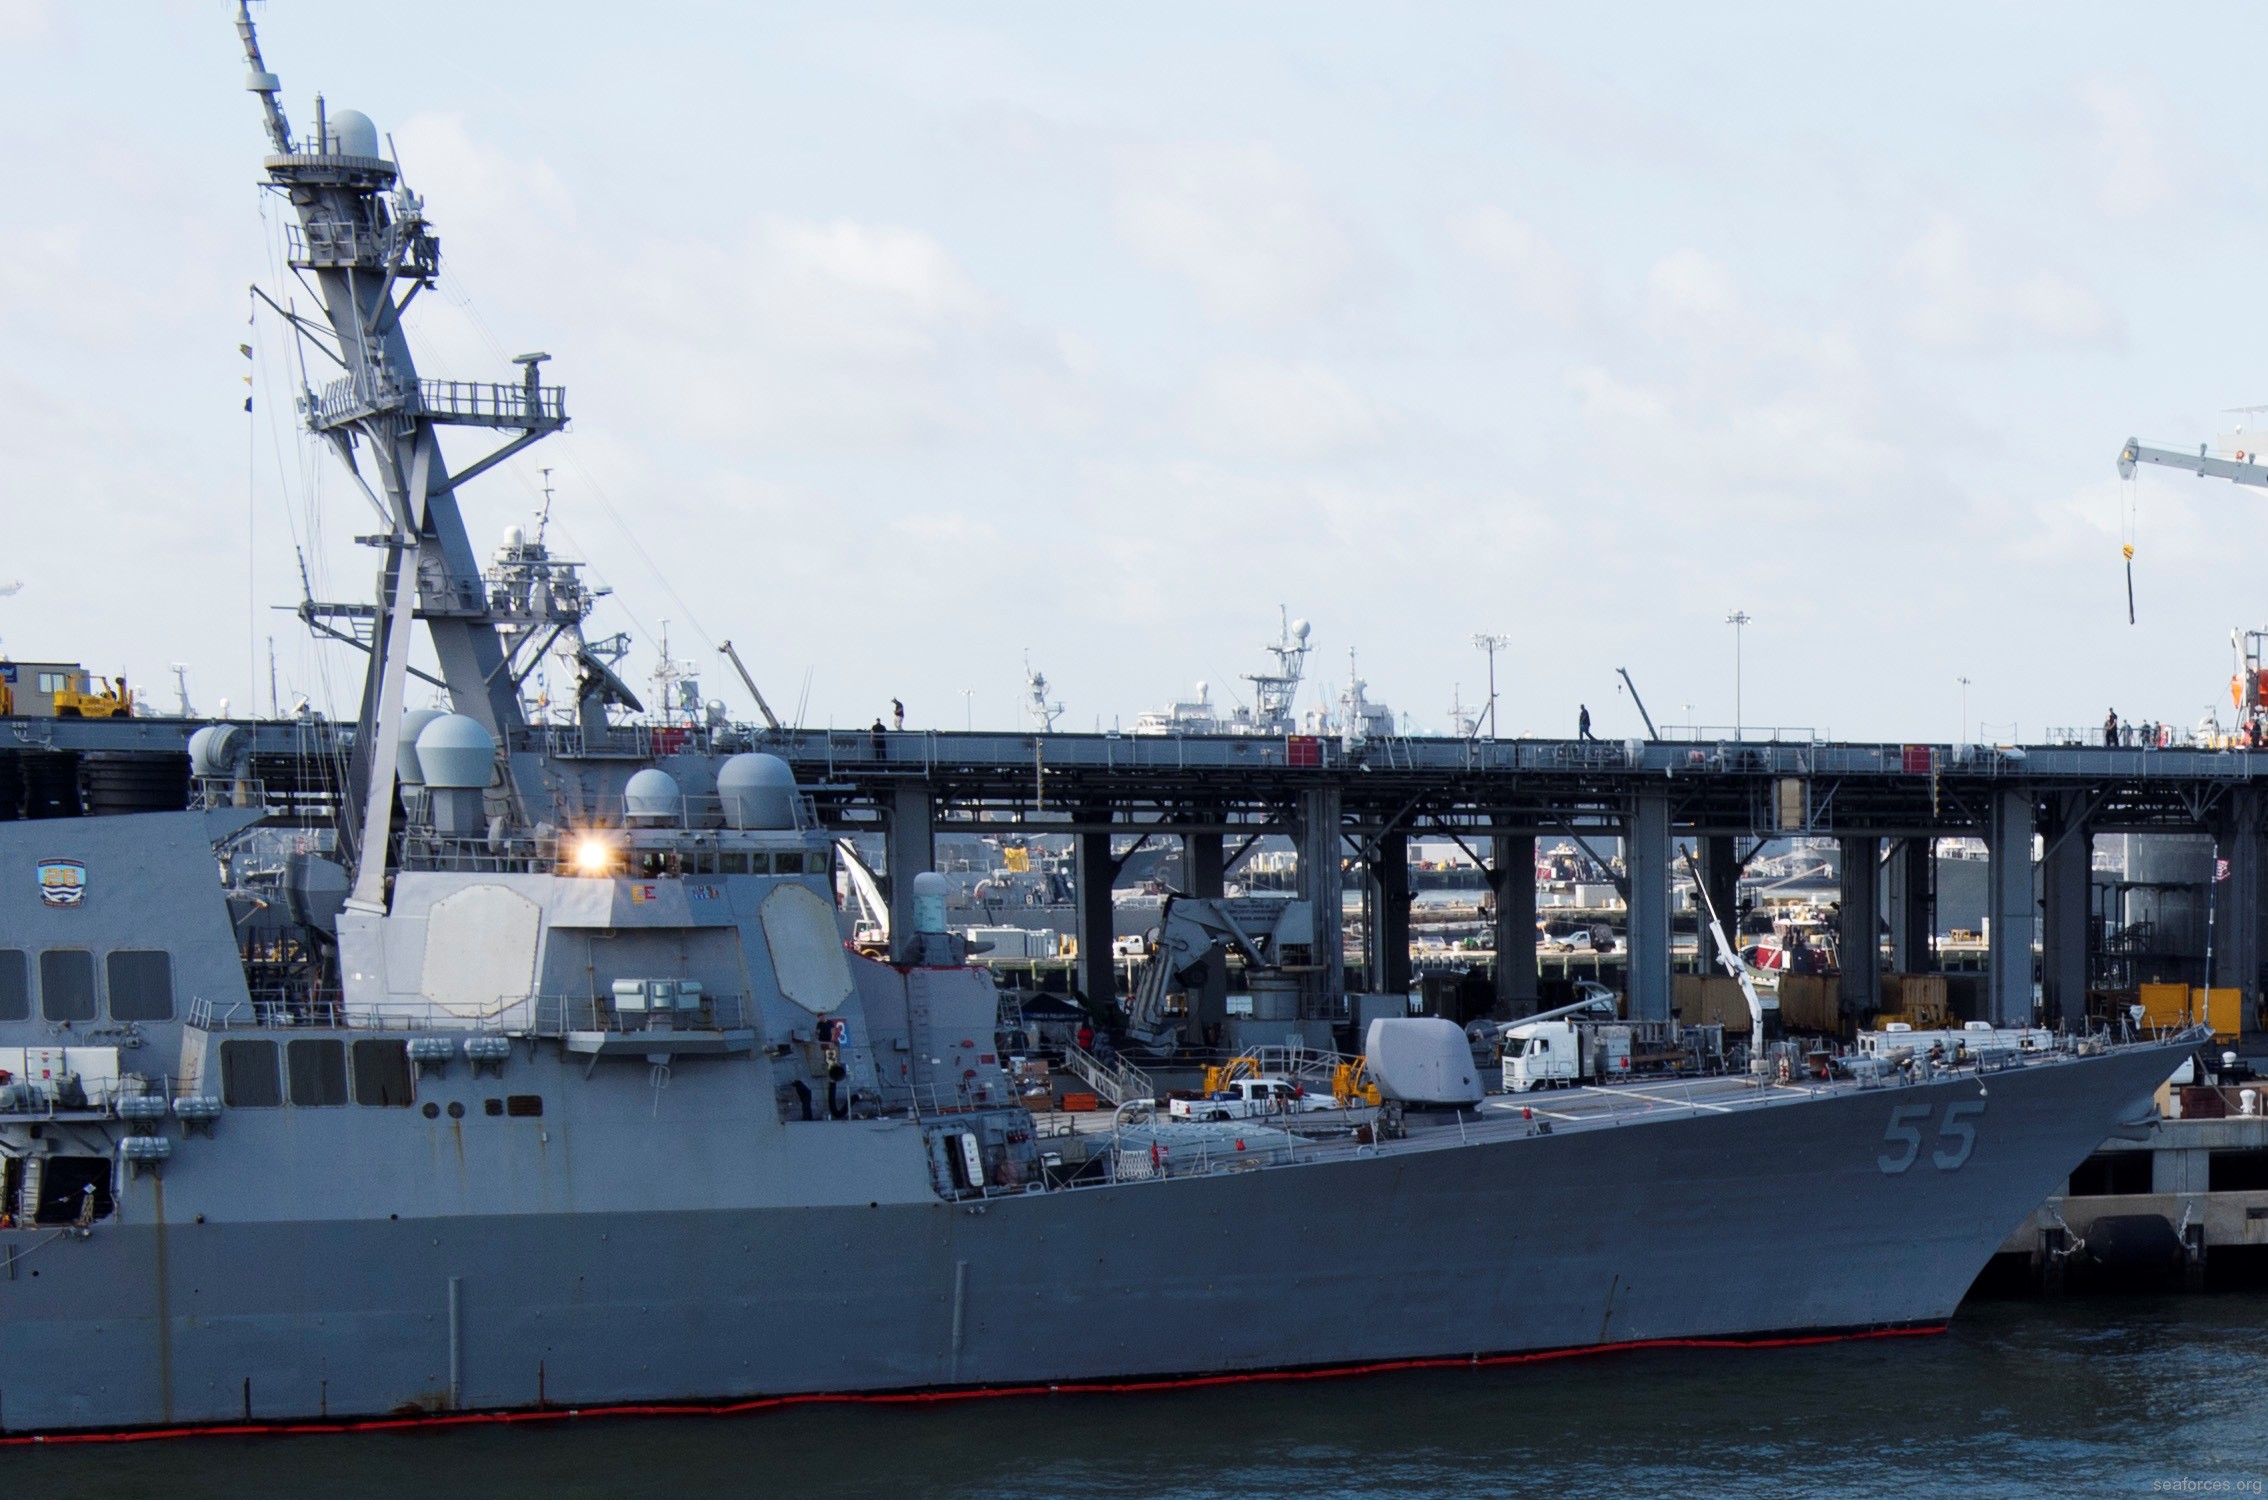 ddg-55 uss stout guided missile destroyer us navy 02 naval station norfolk virginia